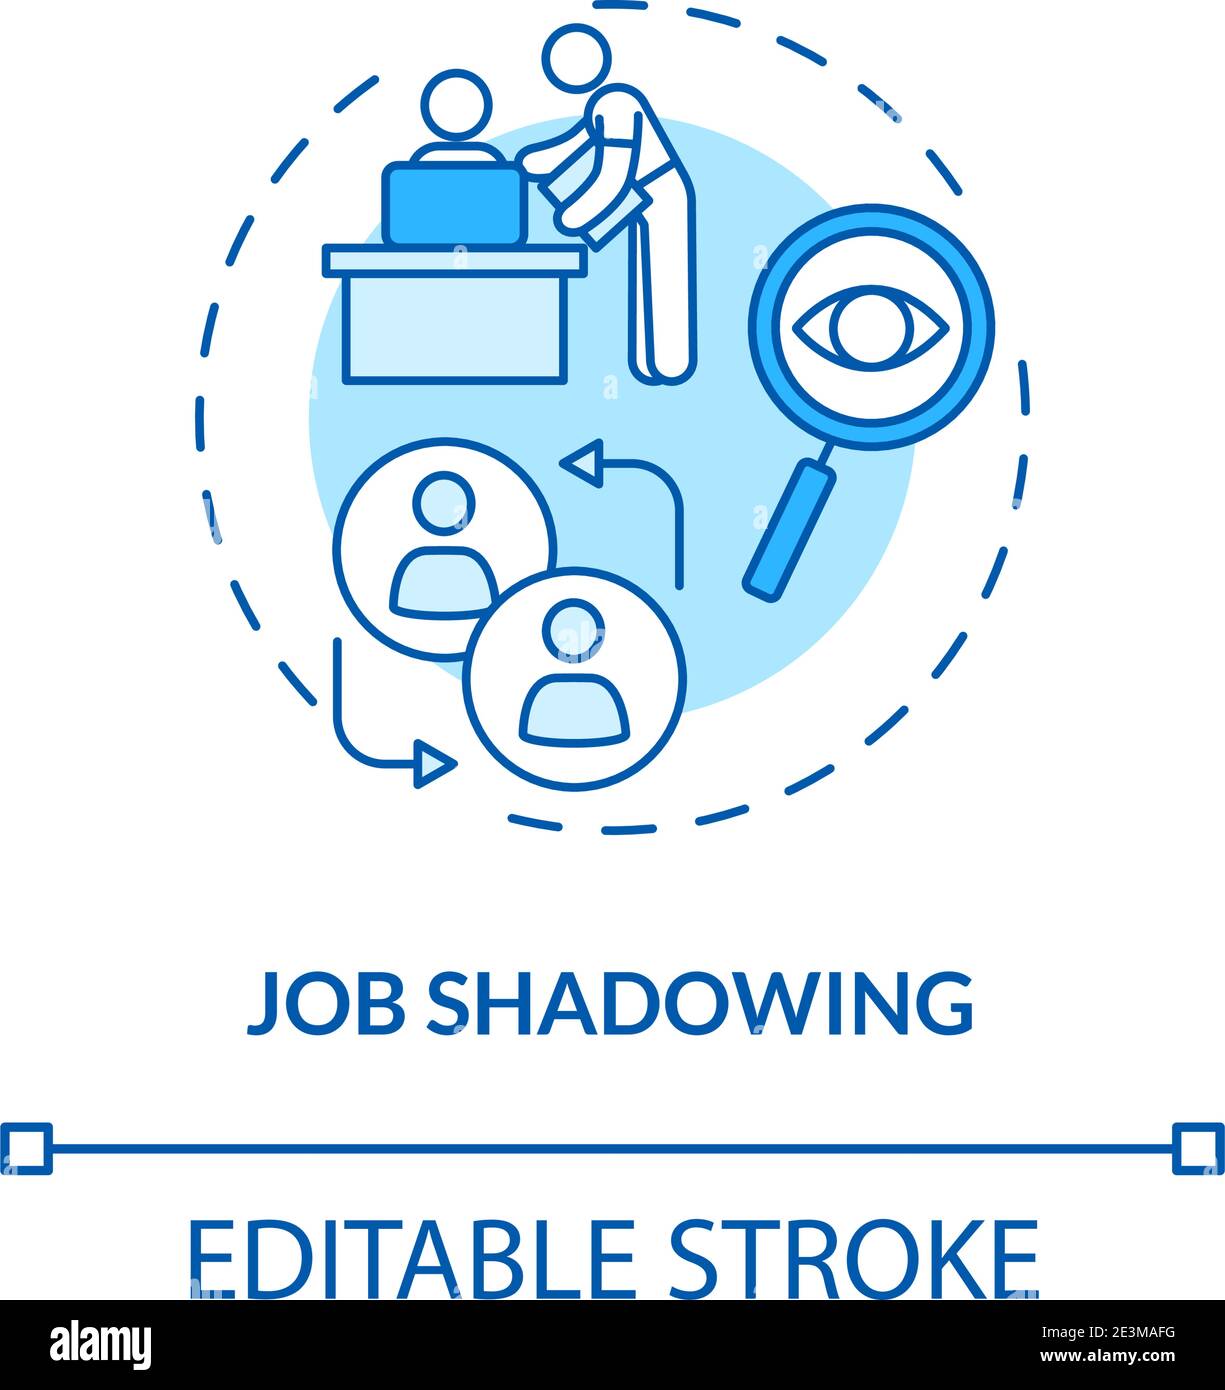 Job Shadow Day @Roweb Craiova (eveniment online) 